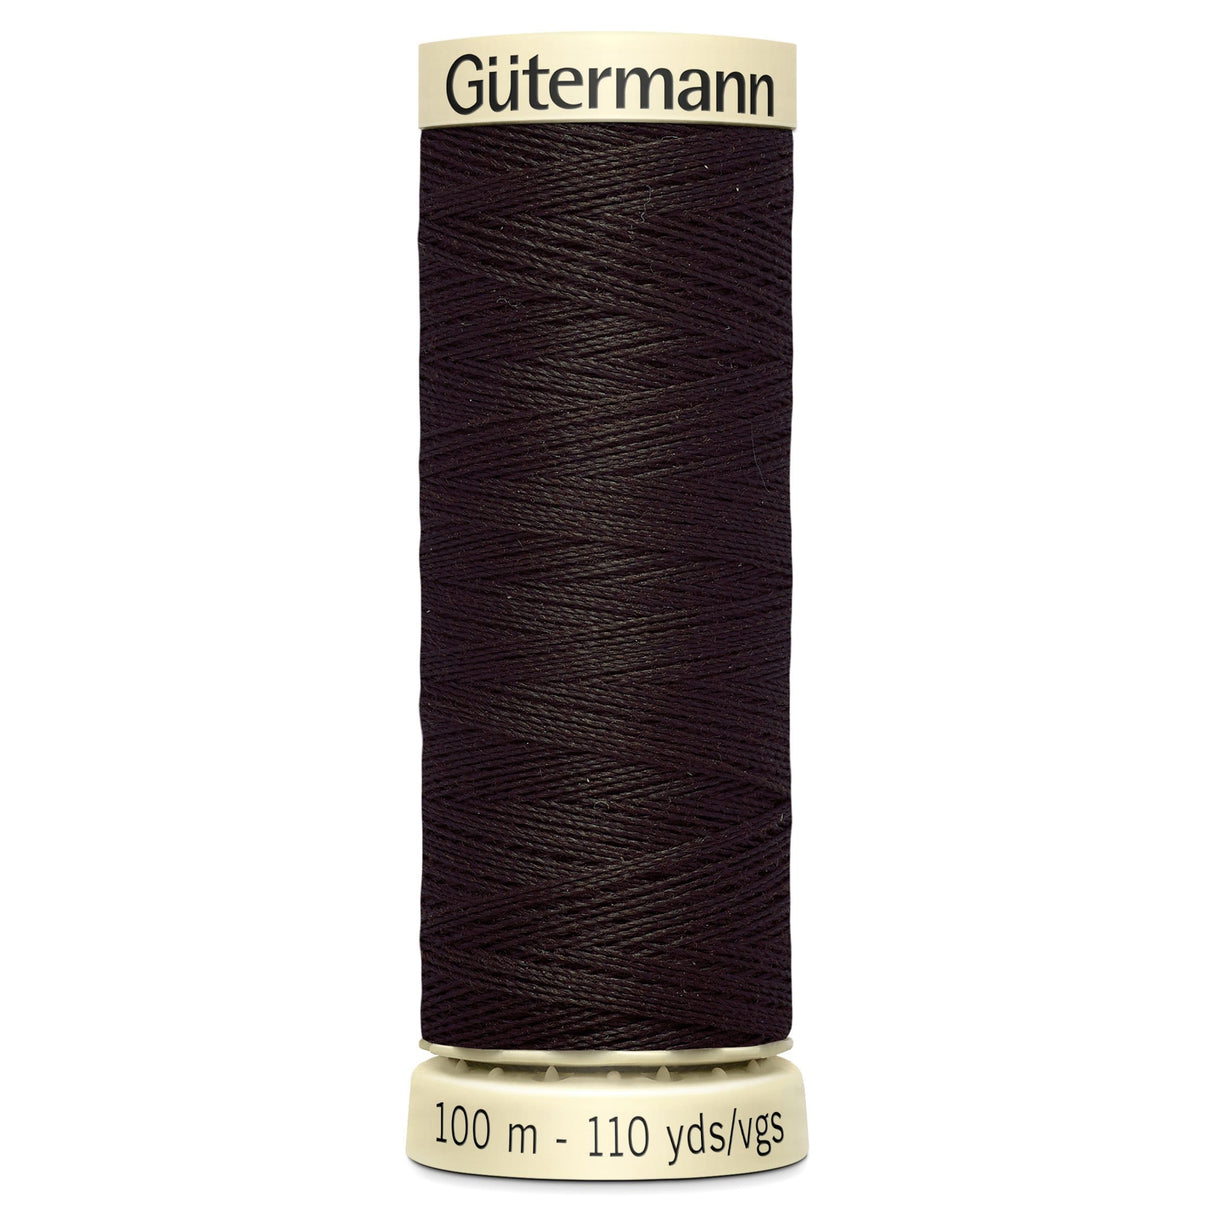 Groves Haberdashery 697 Gutermann Thread Sewing Cotton 100 m Black to Pink